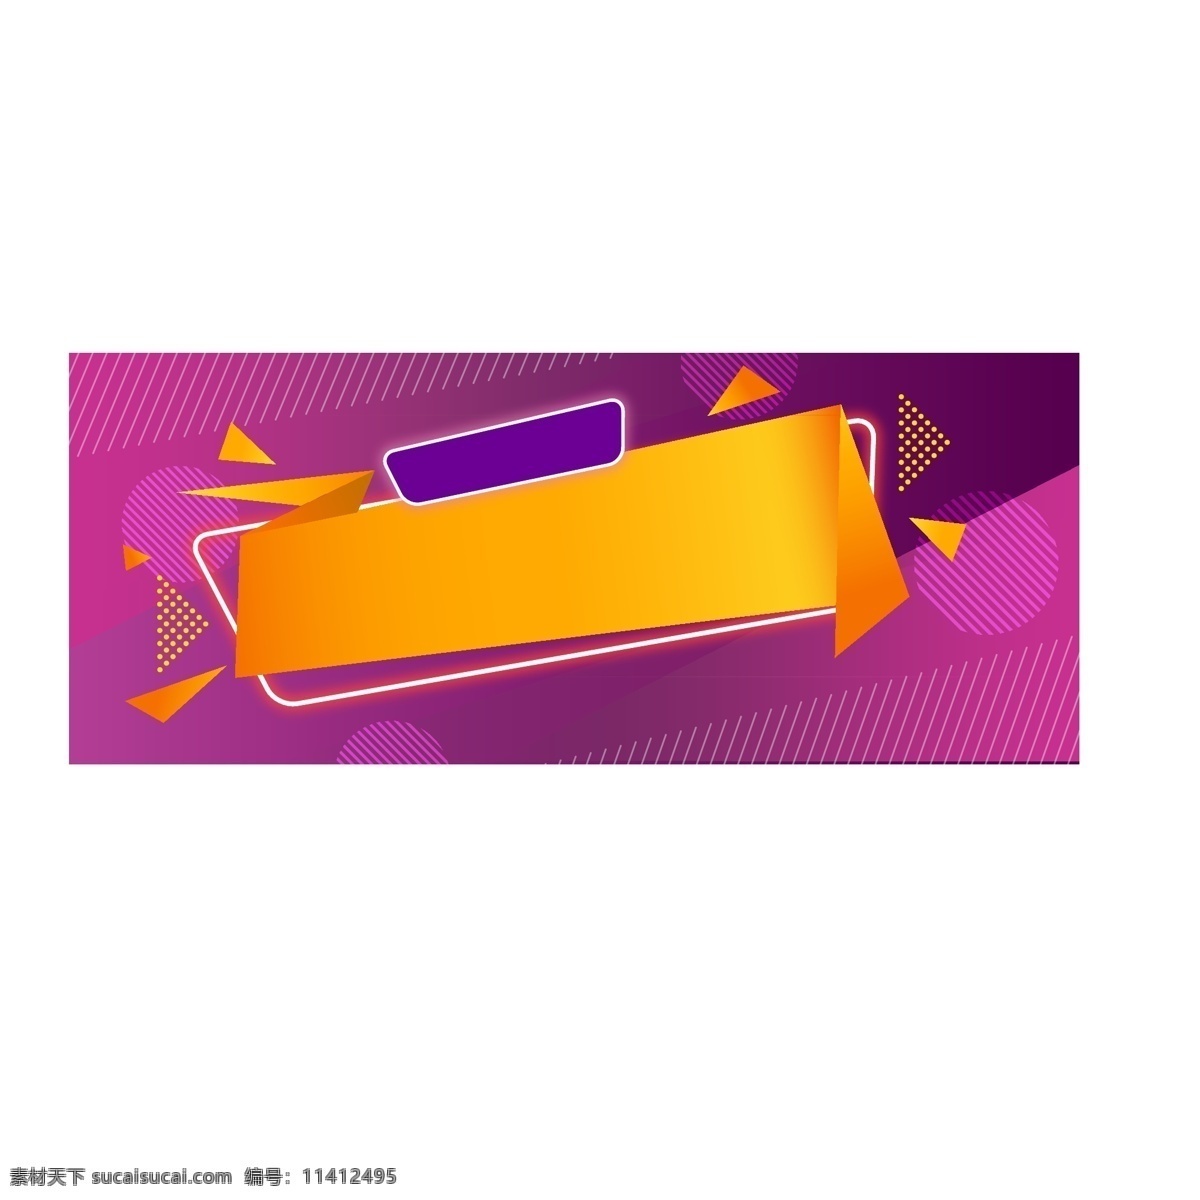 促销 时尚 几何 紫色 黄色 banner 背景 矢量 紫苏